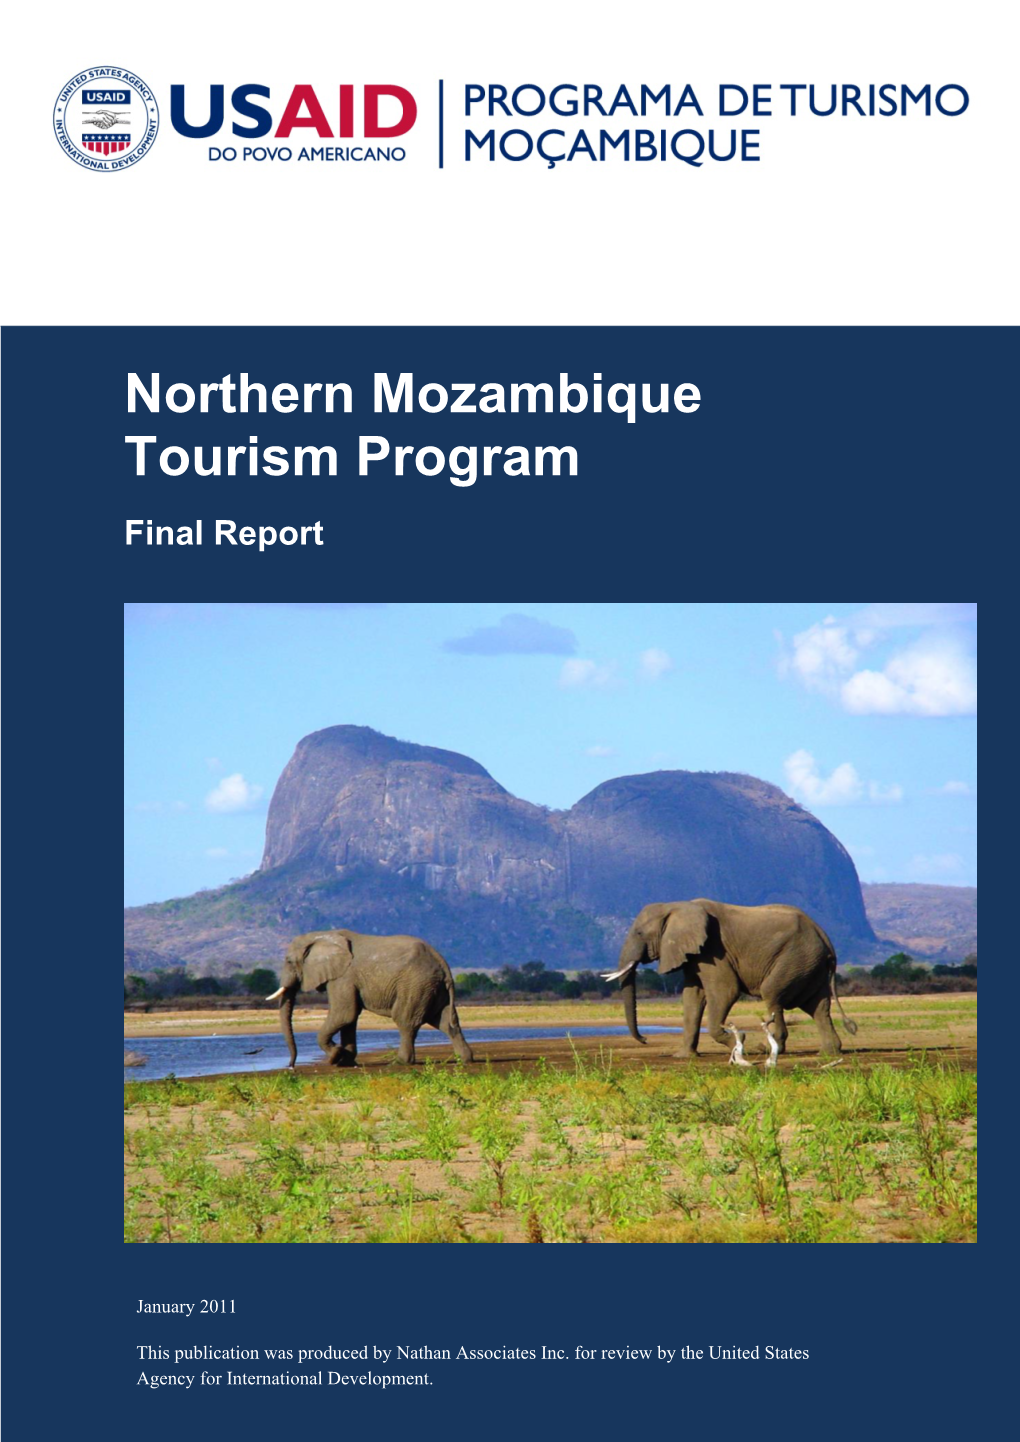 Northern Mozambique Tourism Program Final Report